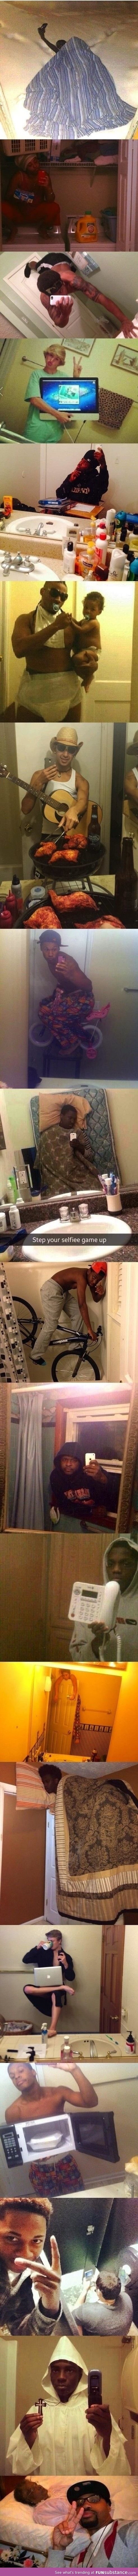 The selfie games